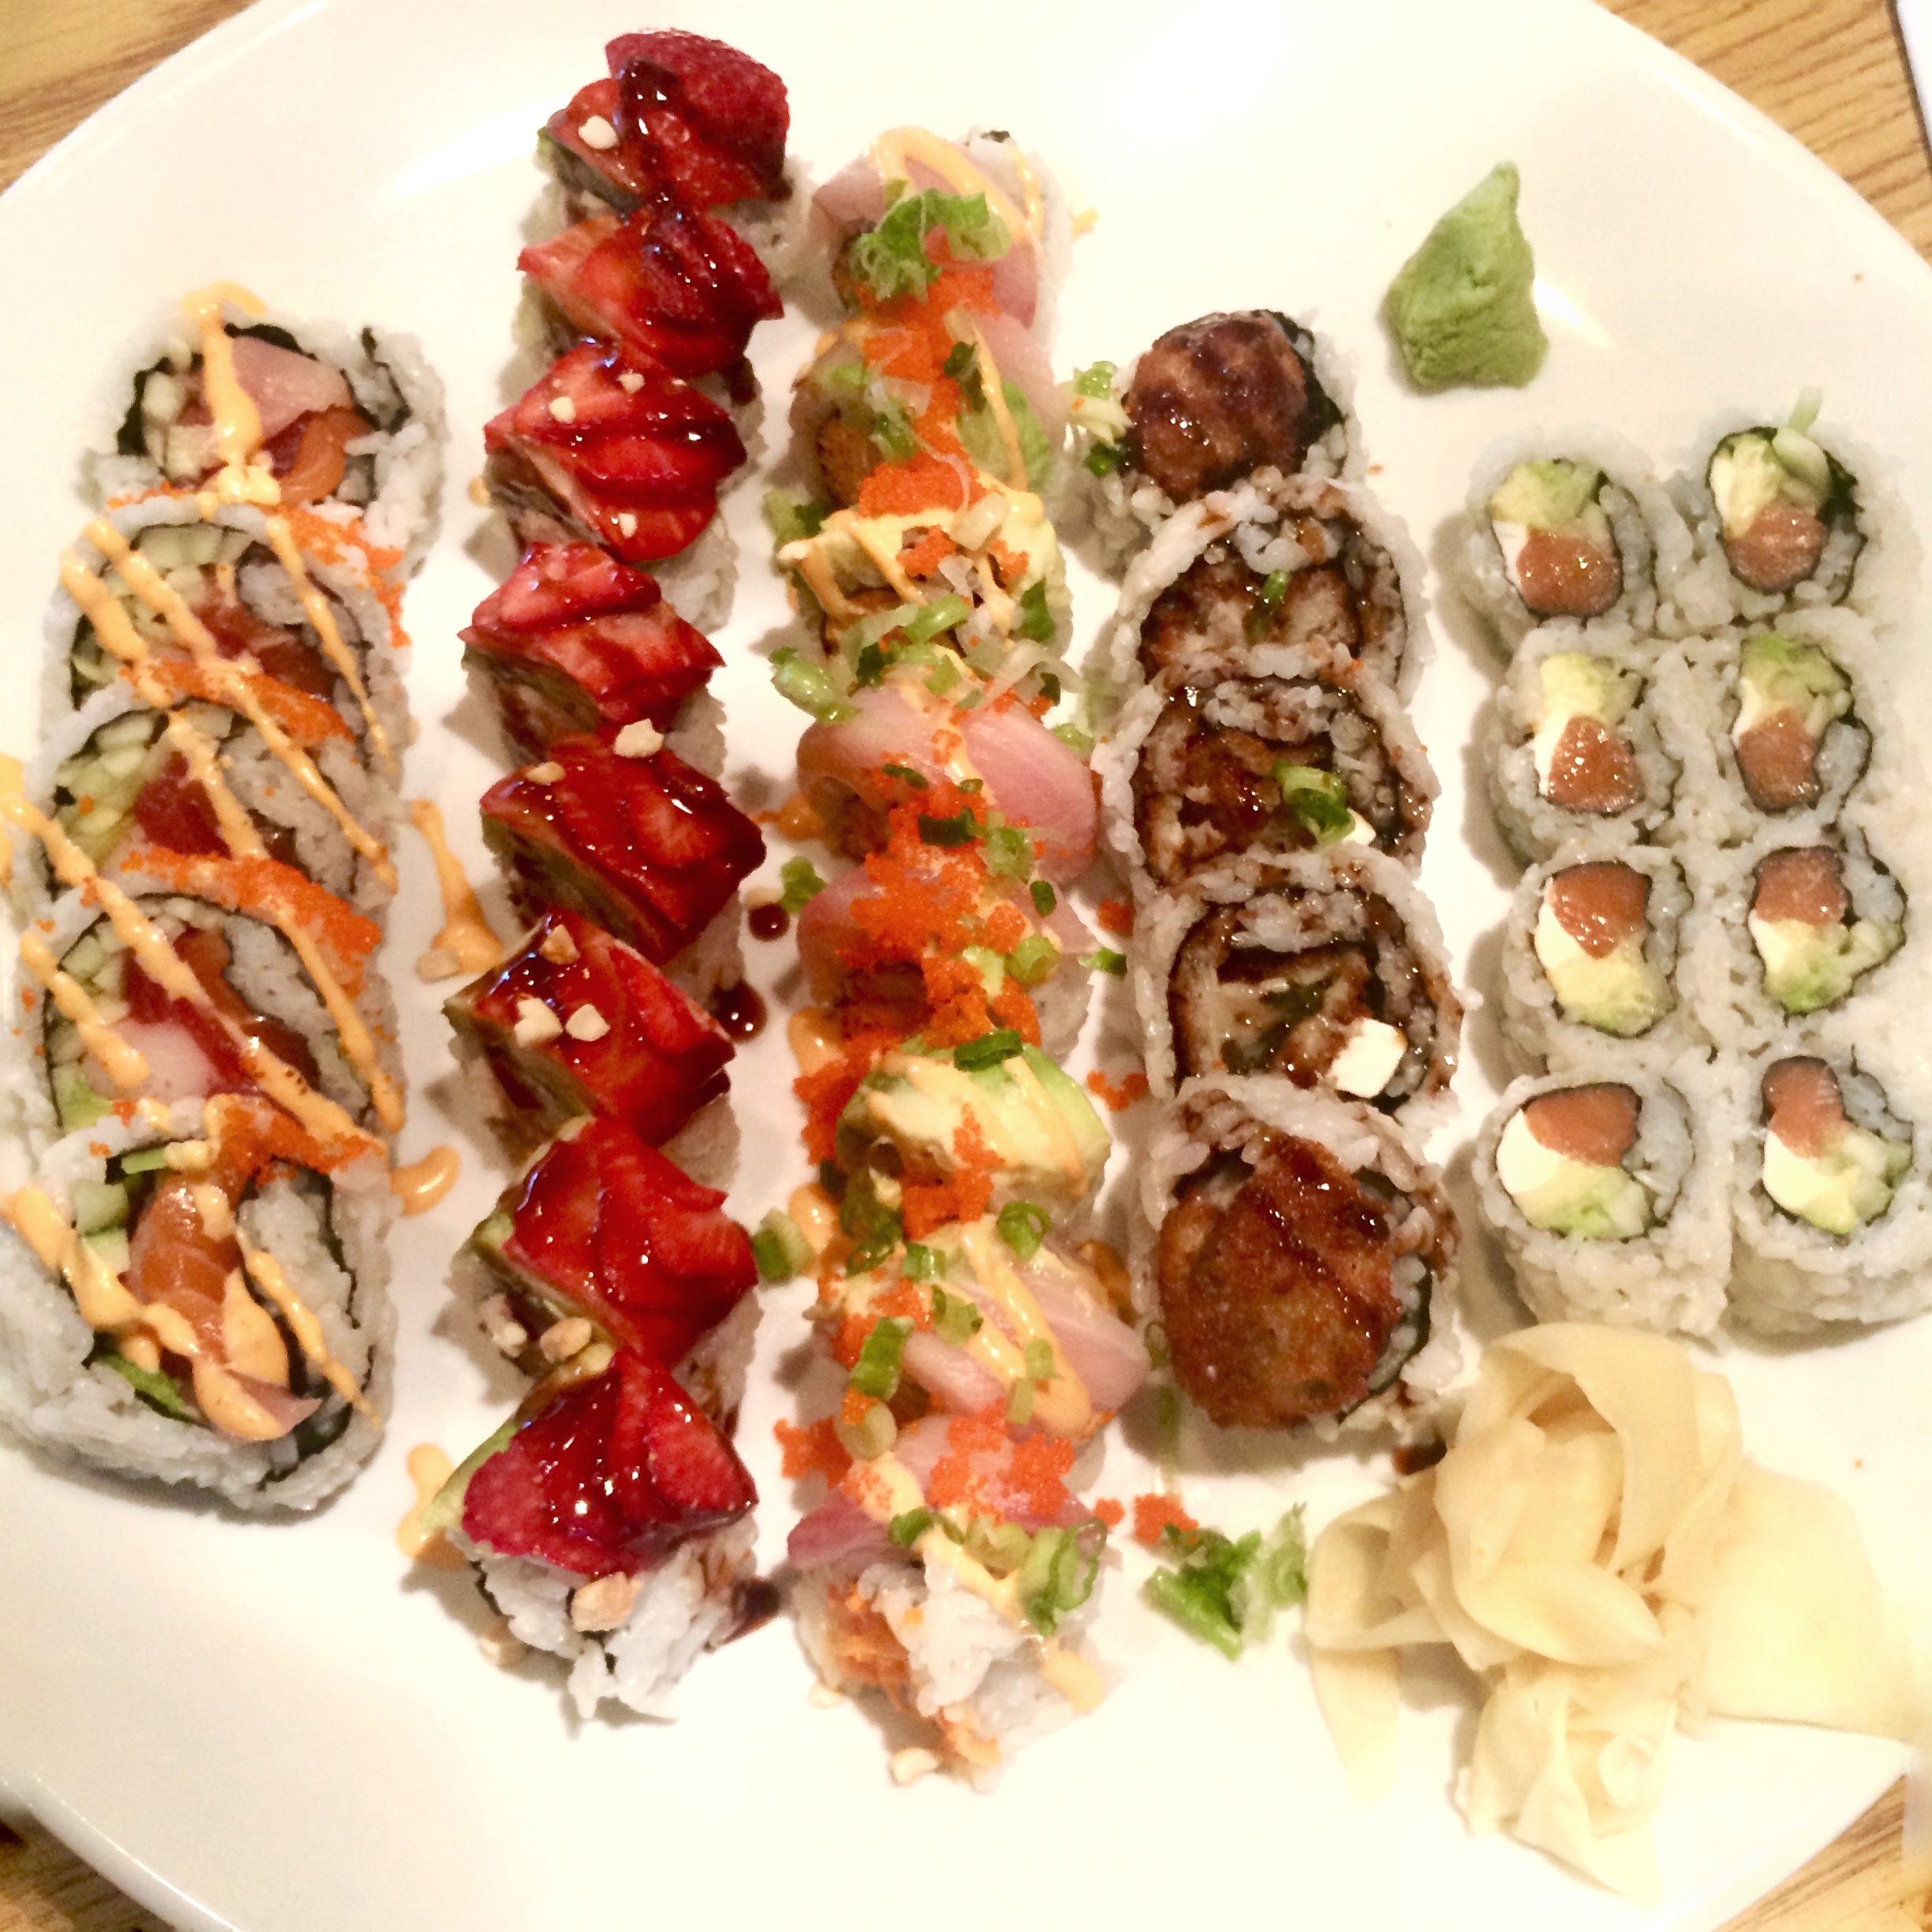 Samurai Sushi: Nashville's Favorite Sushi Spot - Girls on Food